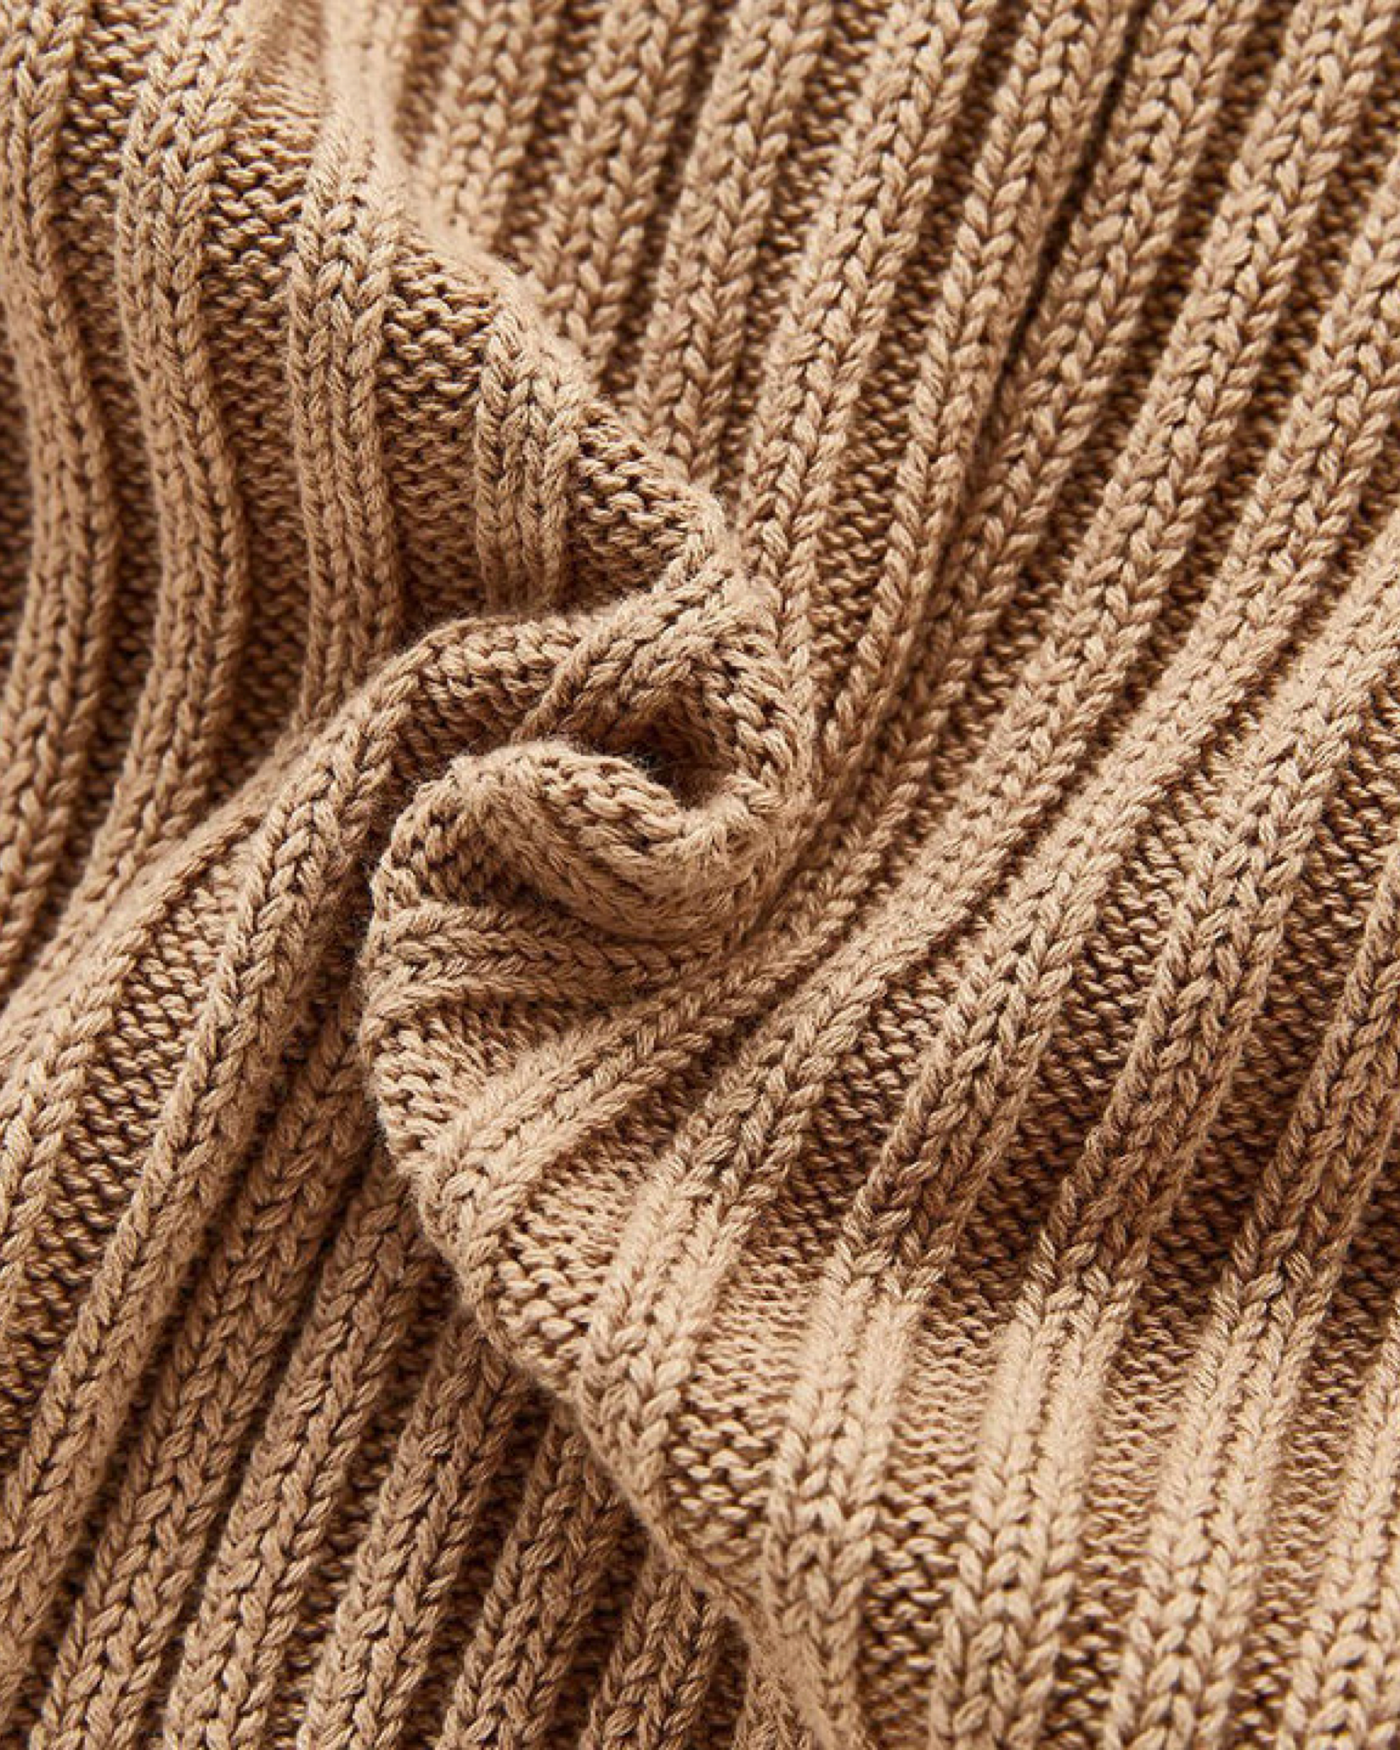 Knit Sweater Romper